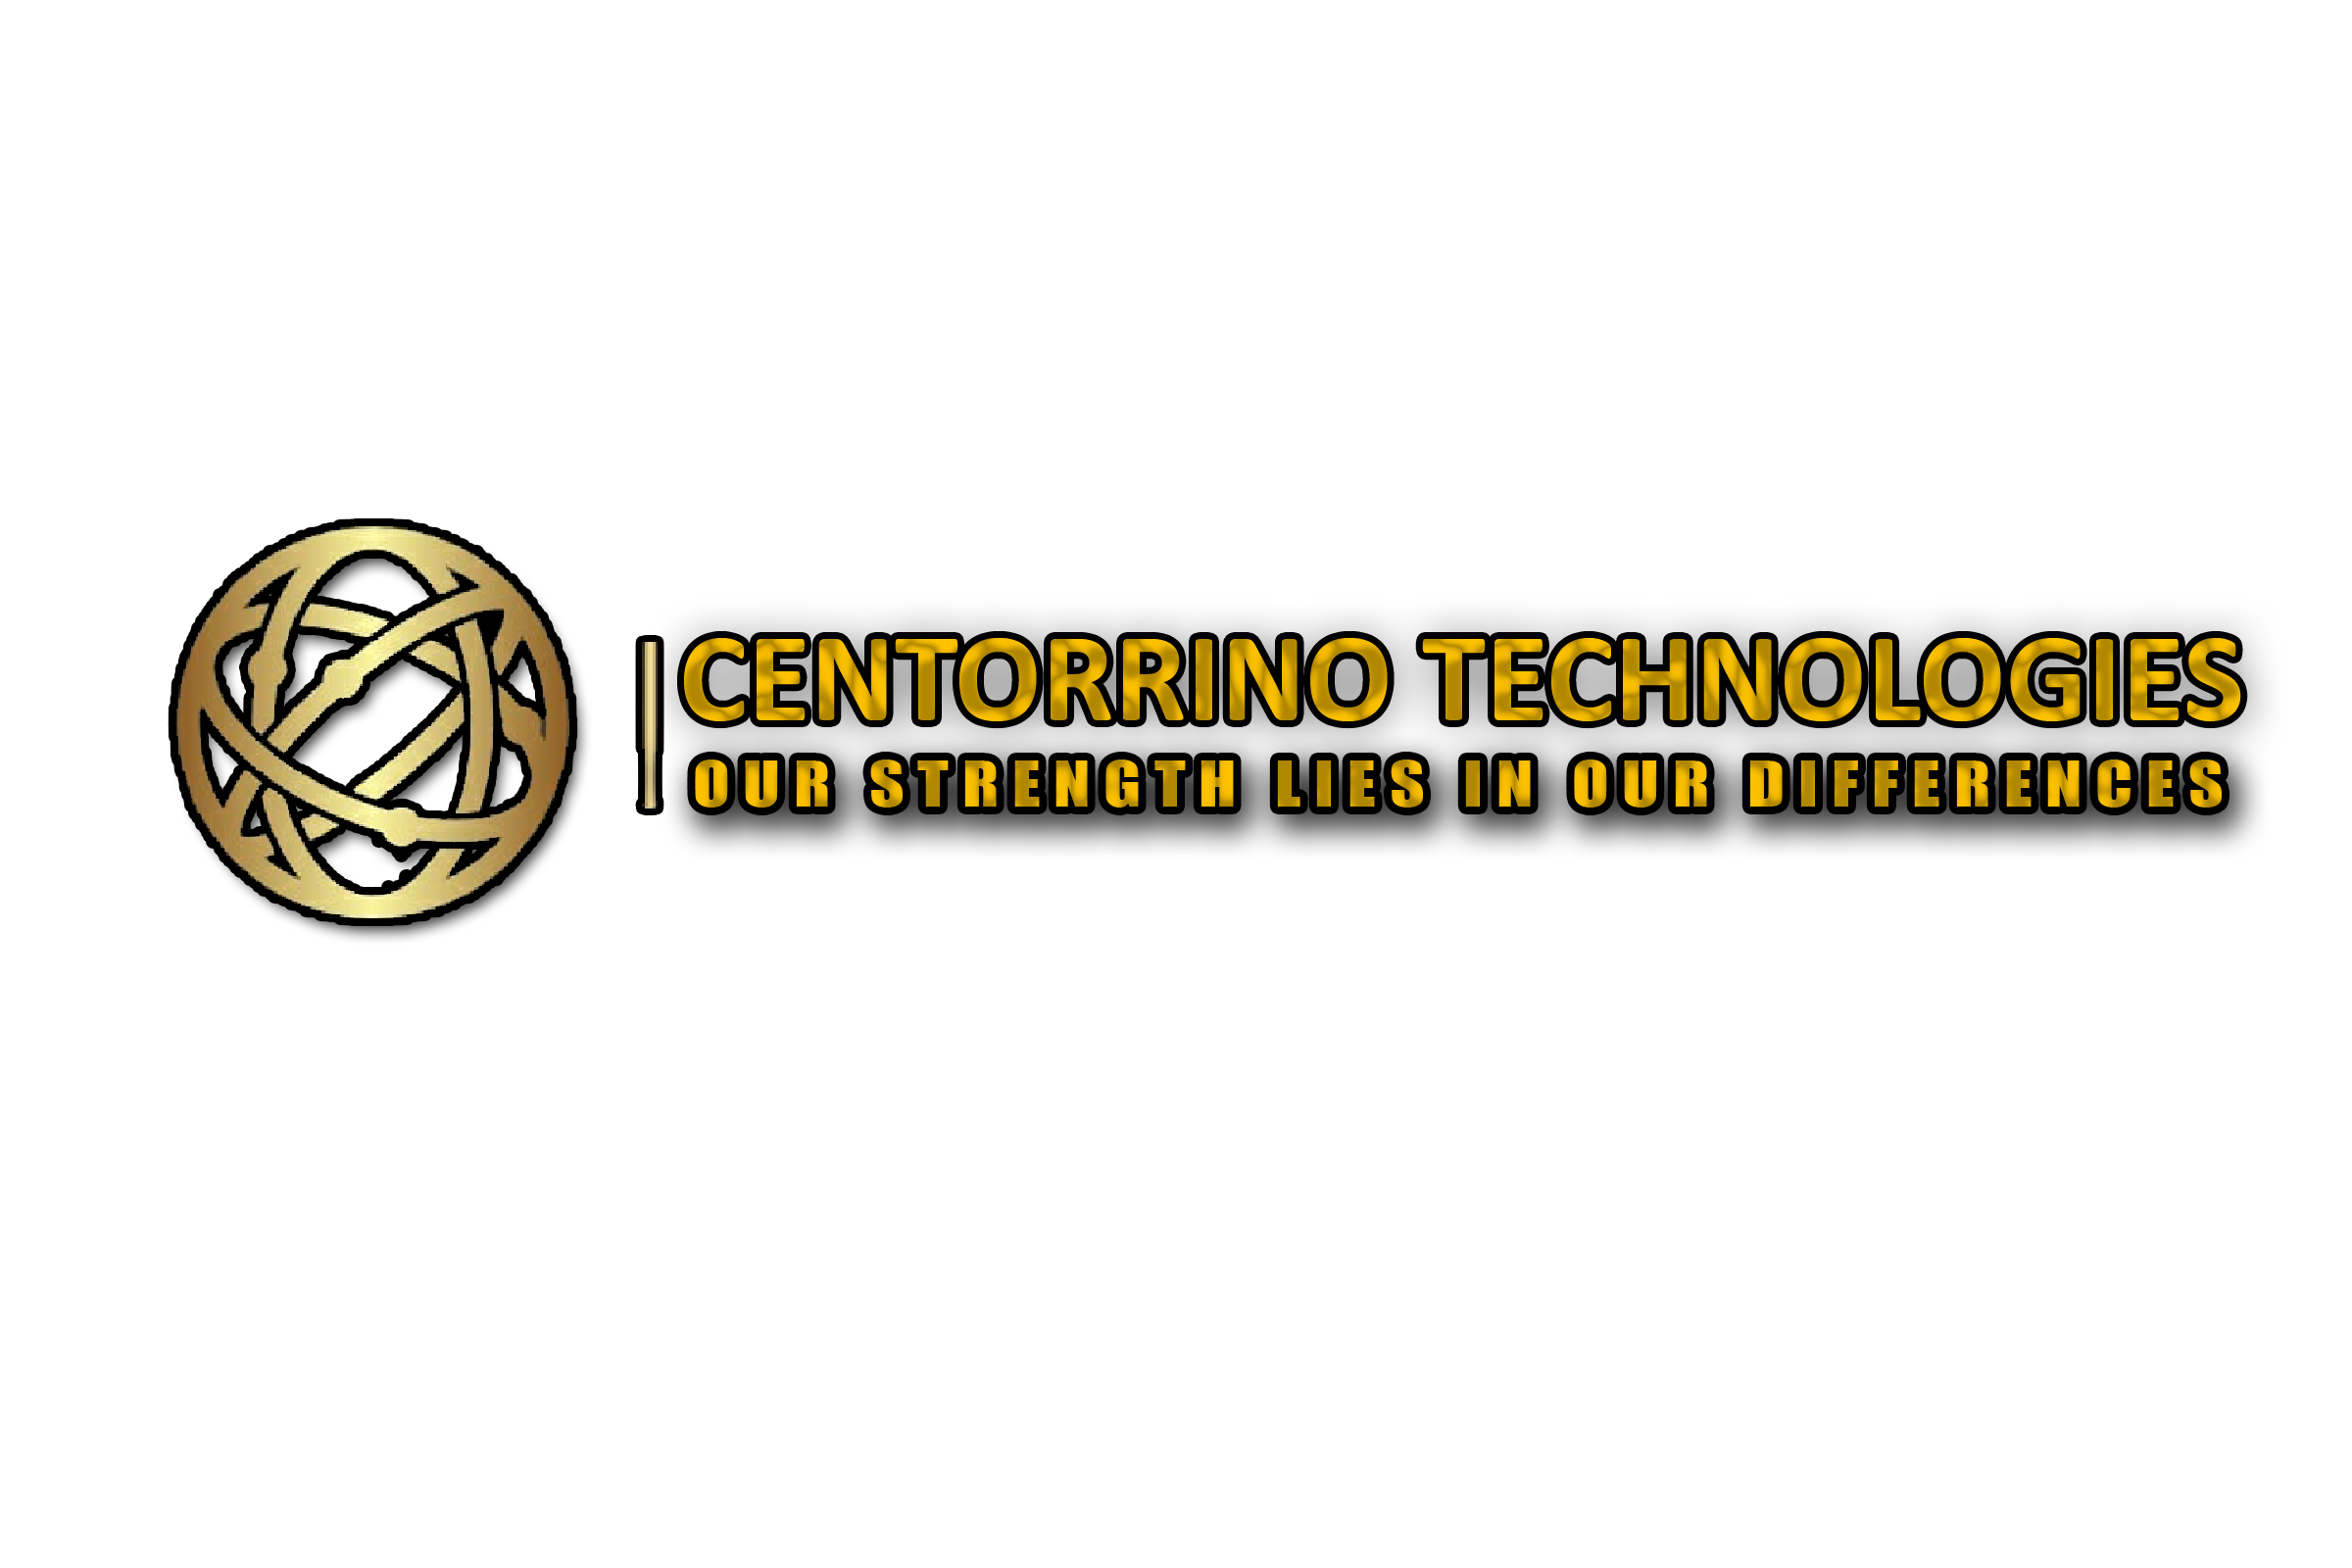 Centorrino technologies